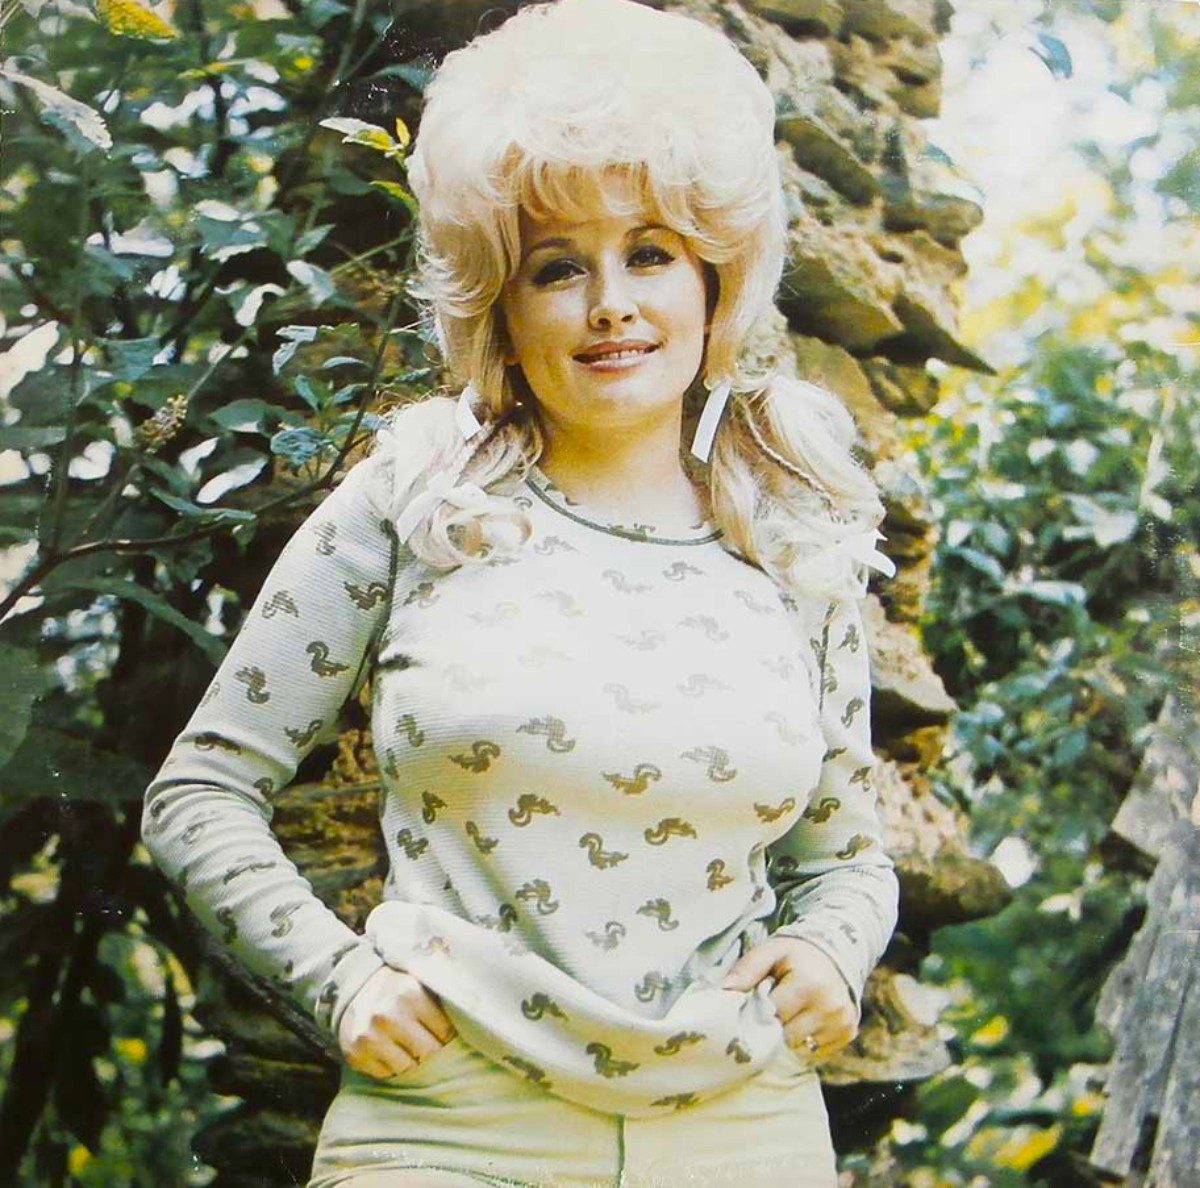 La jeune Dolly Parton